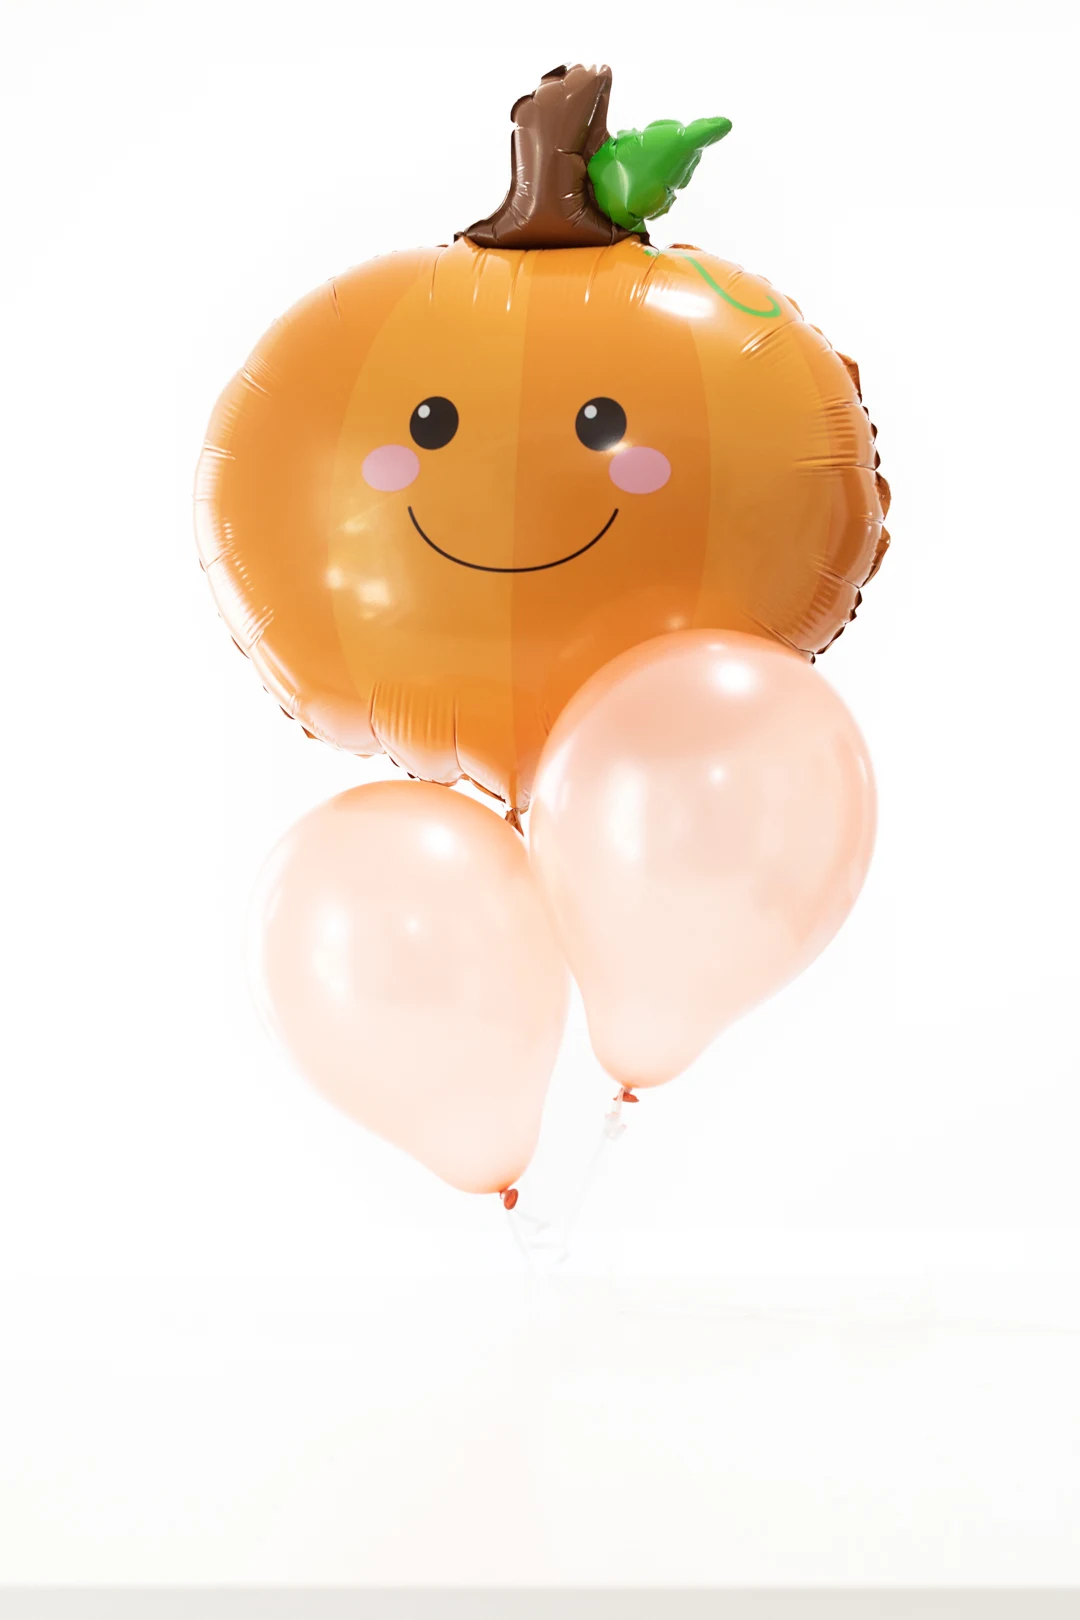 cutest pumpkin balloon ever with kawaii face